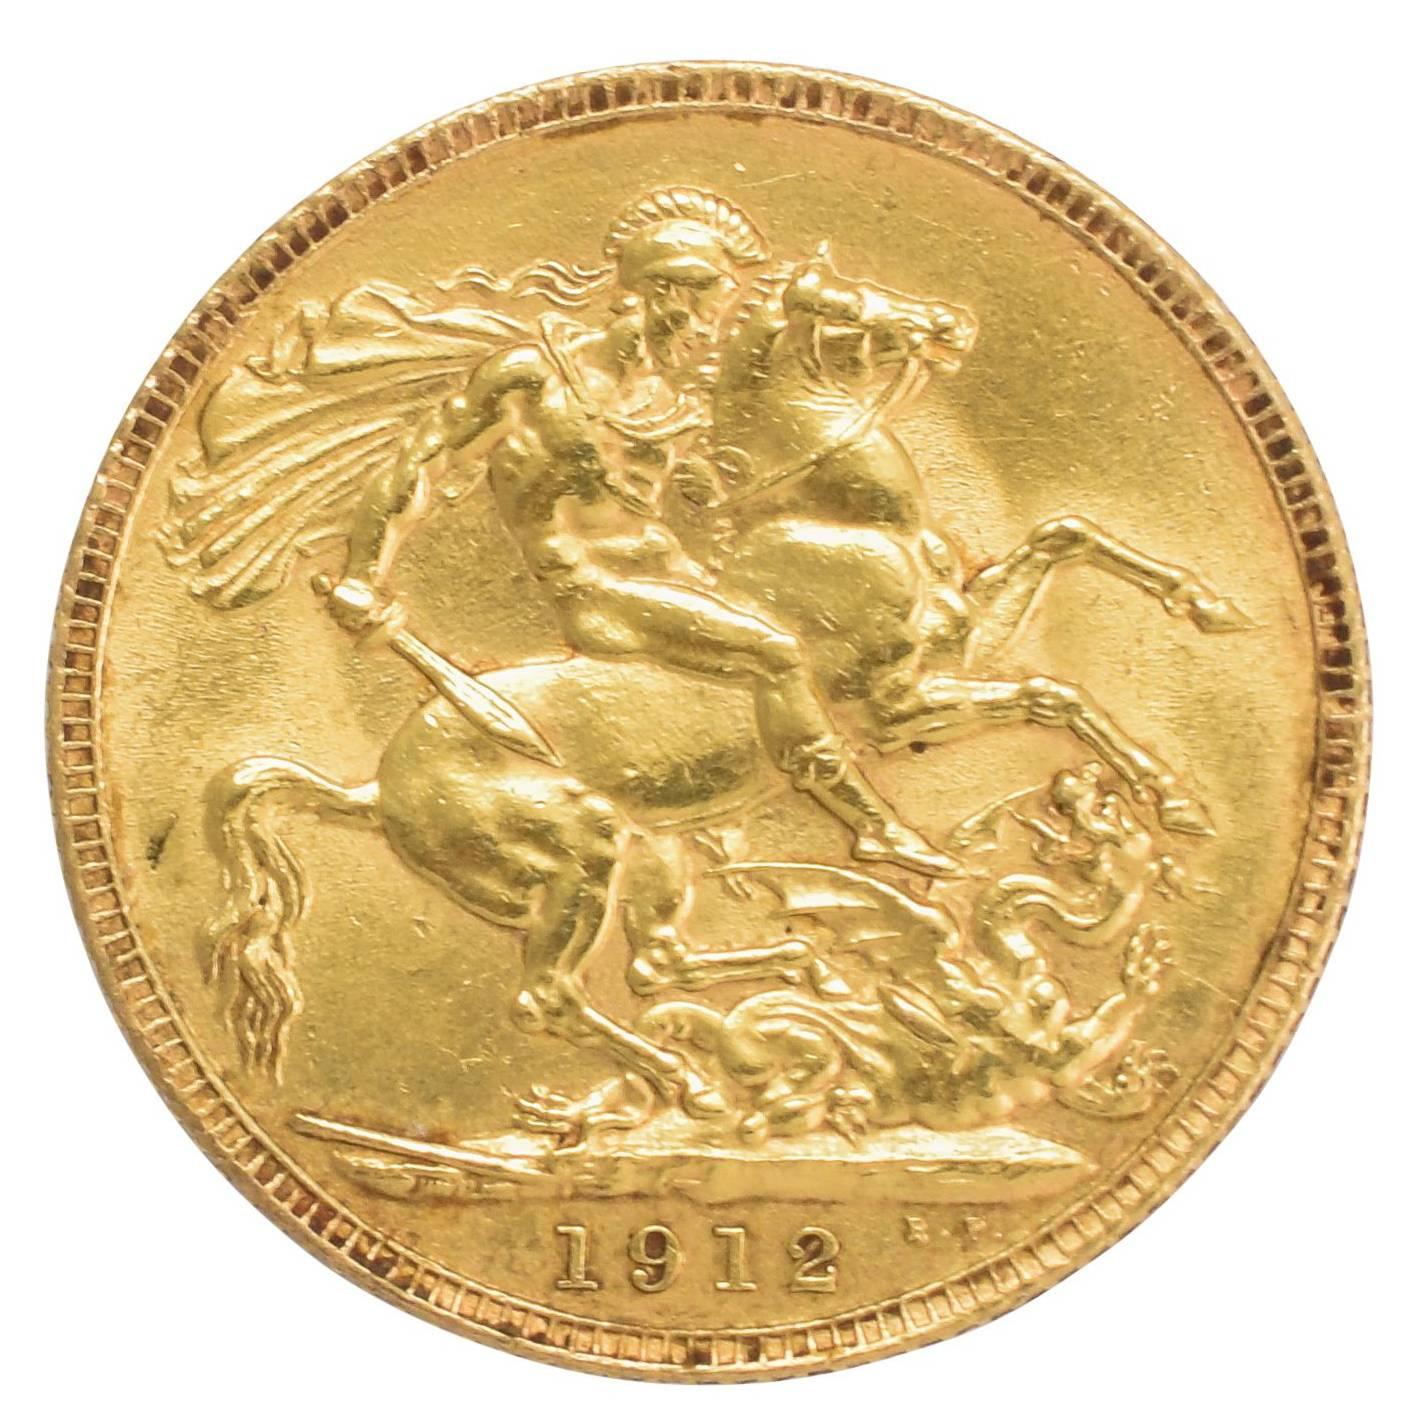 Antique 1912 George V Gold Full Sovereign Coin